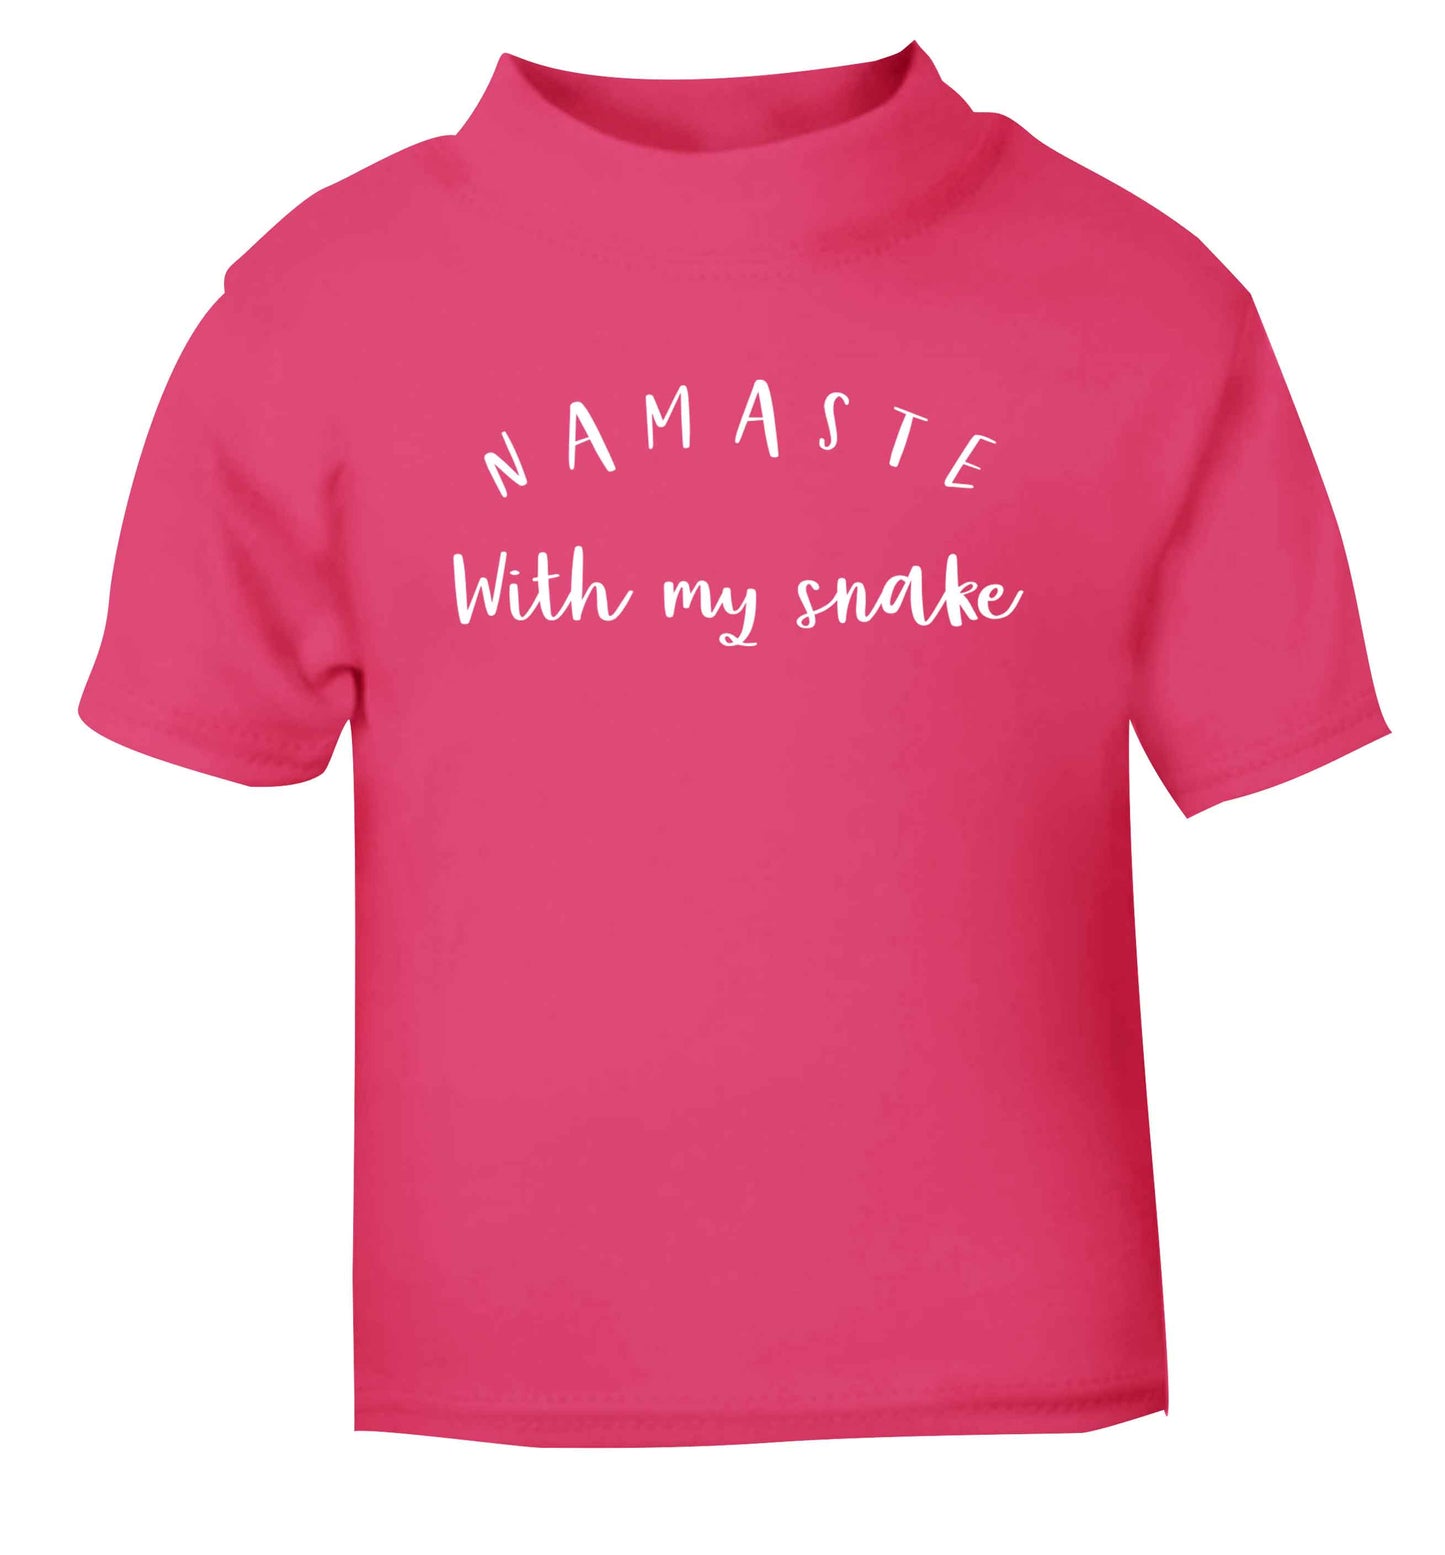 Namaste with my snake pink Baby Toddler Tshirt 2 Years